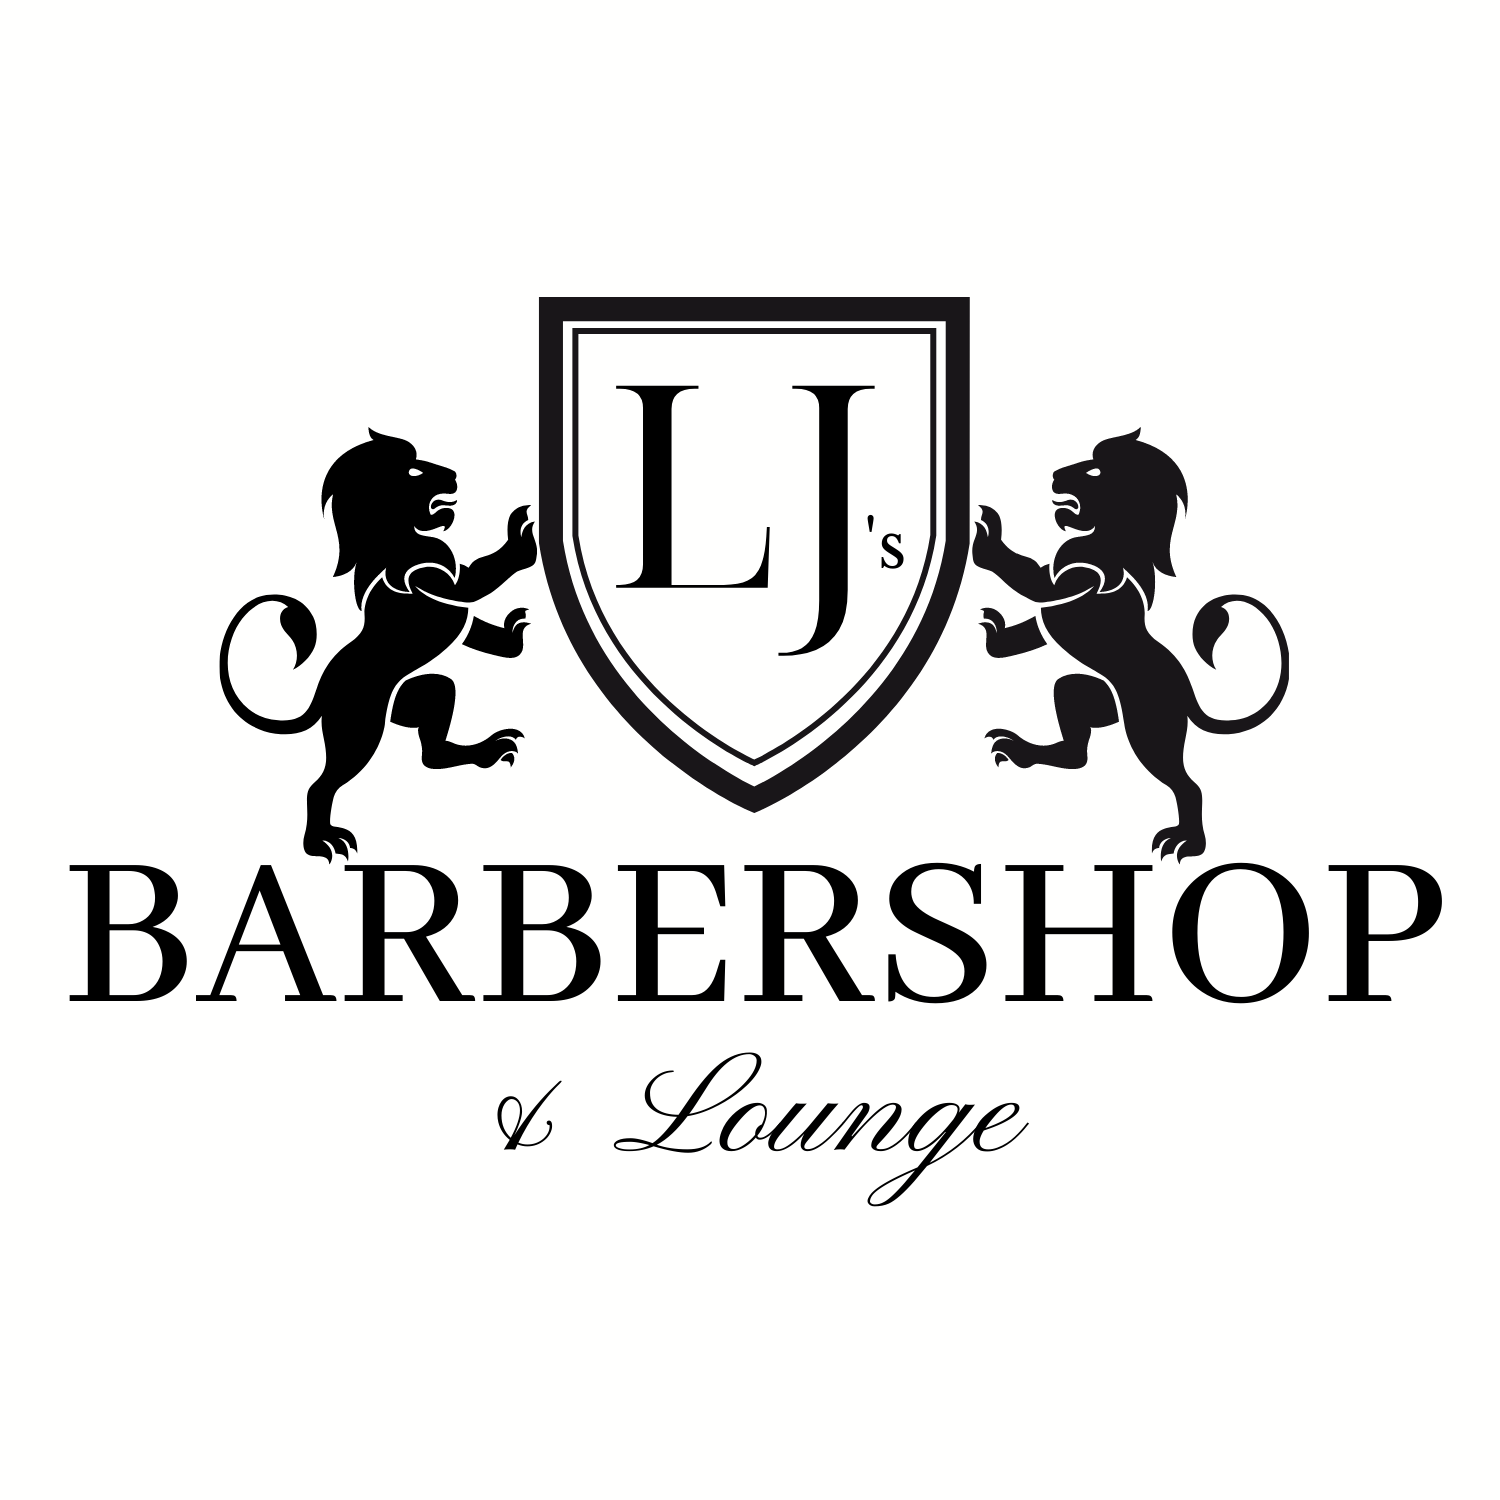 LJ's Barbershop